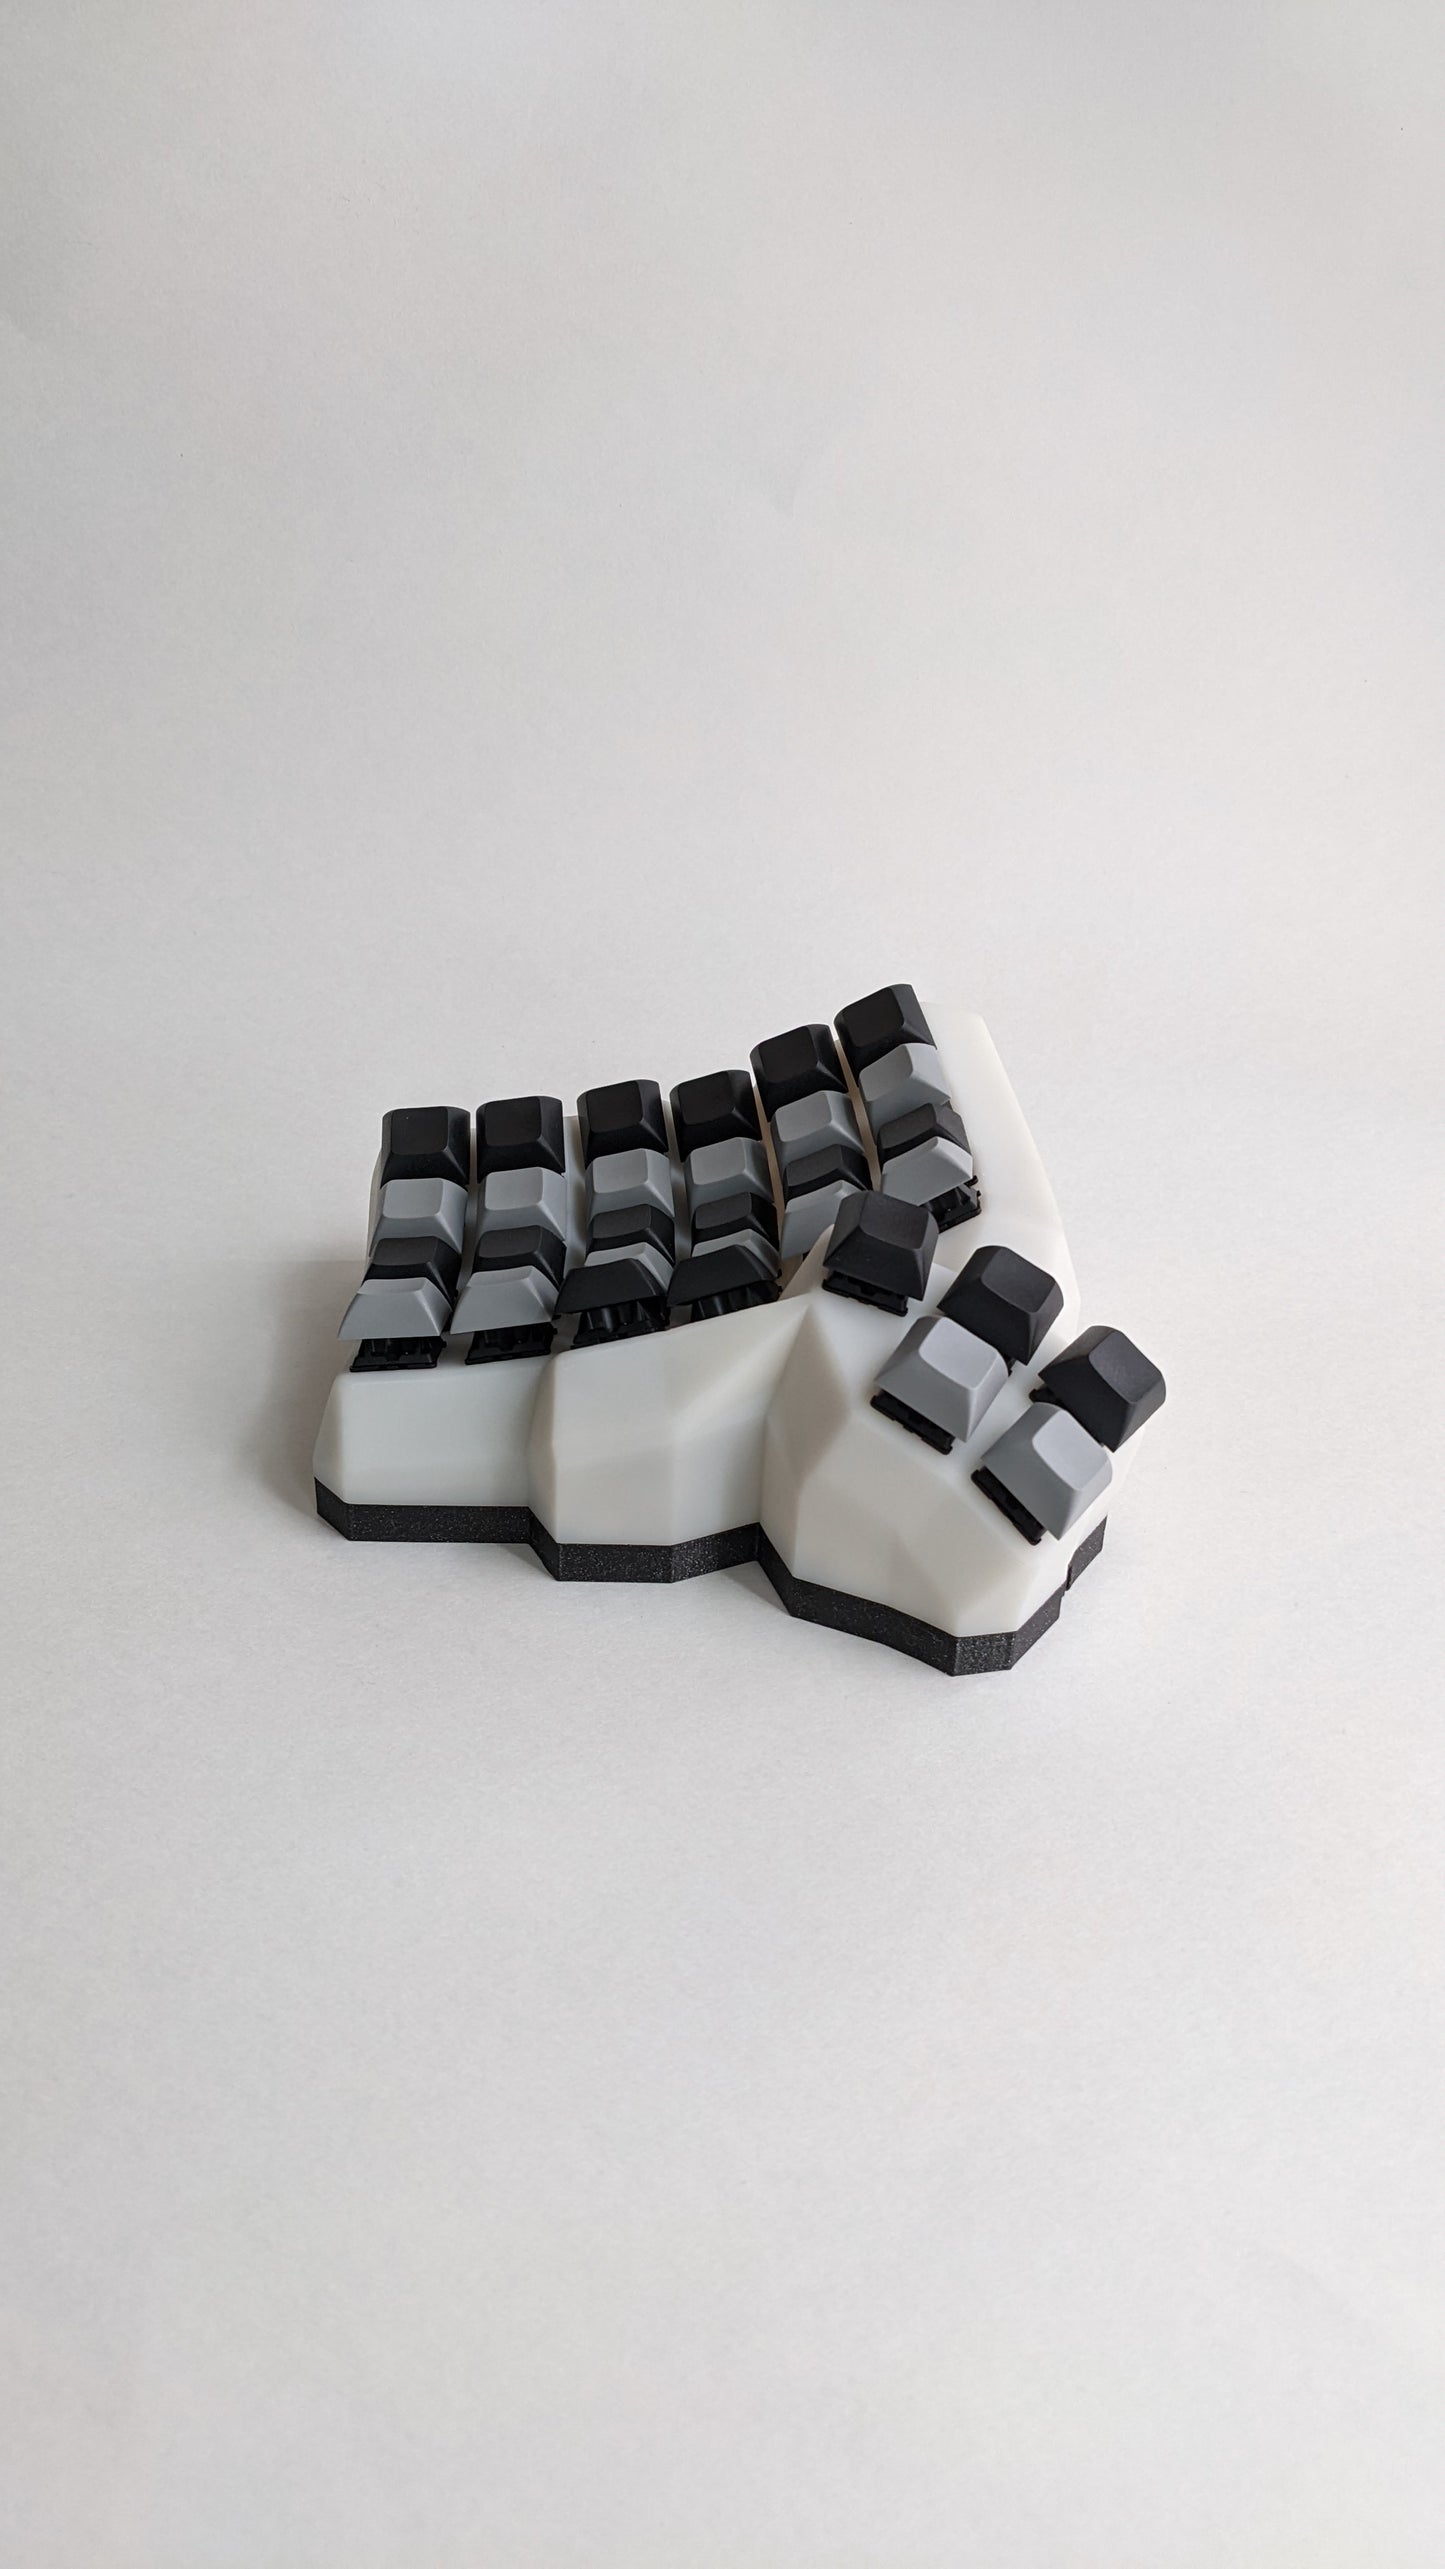 TaikoHub ergonomic dactyl manuform keyboard